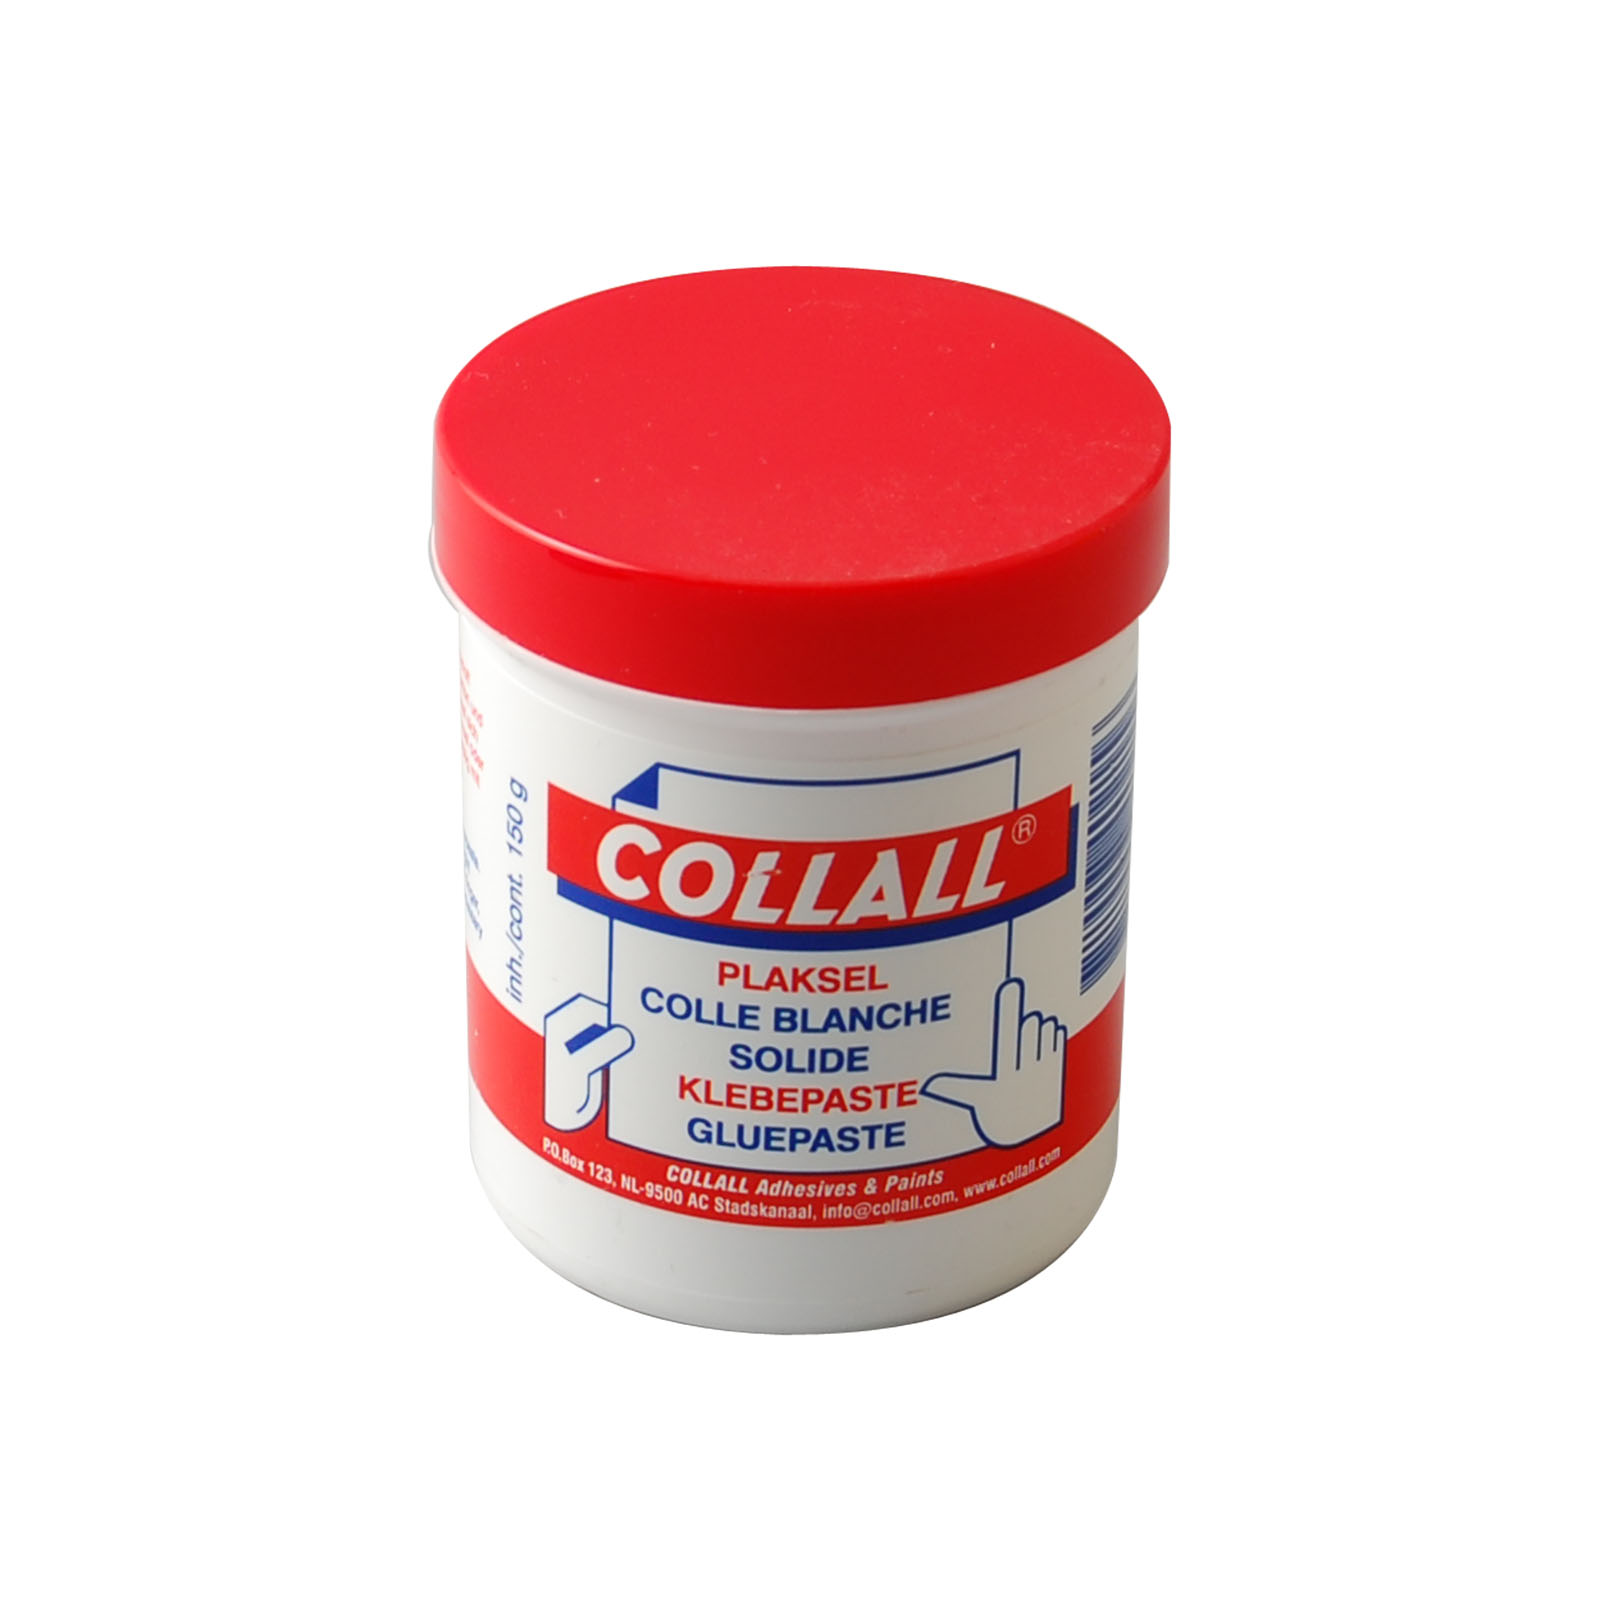 Collall • Plaksel pot 150 gr